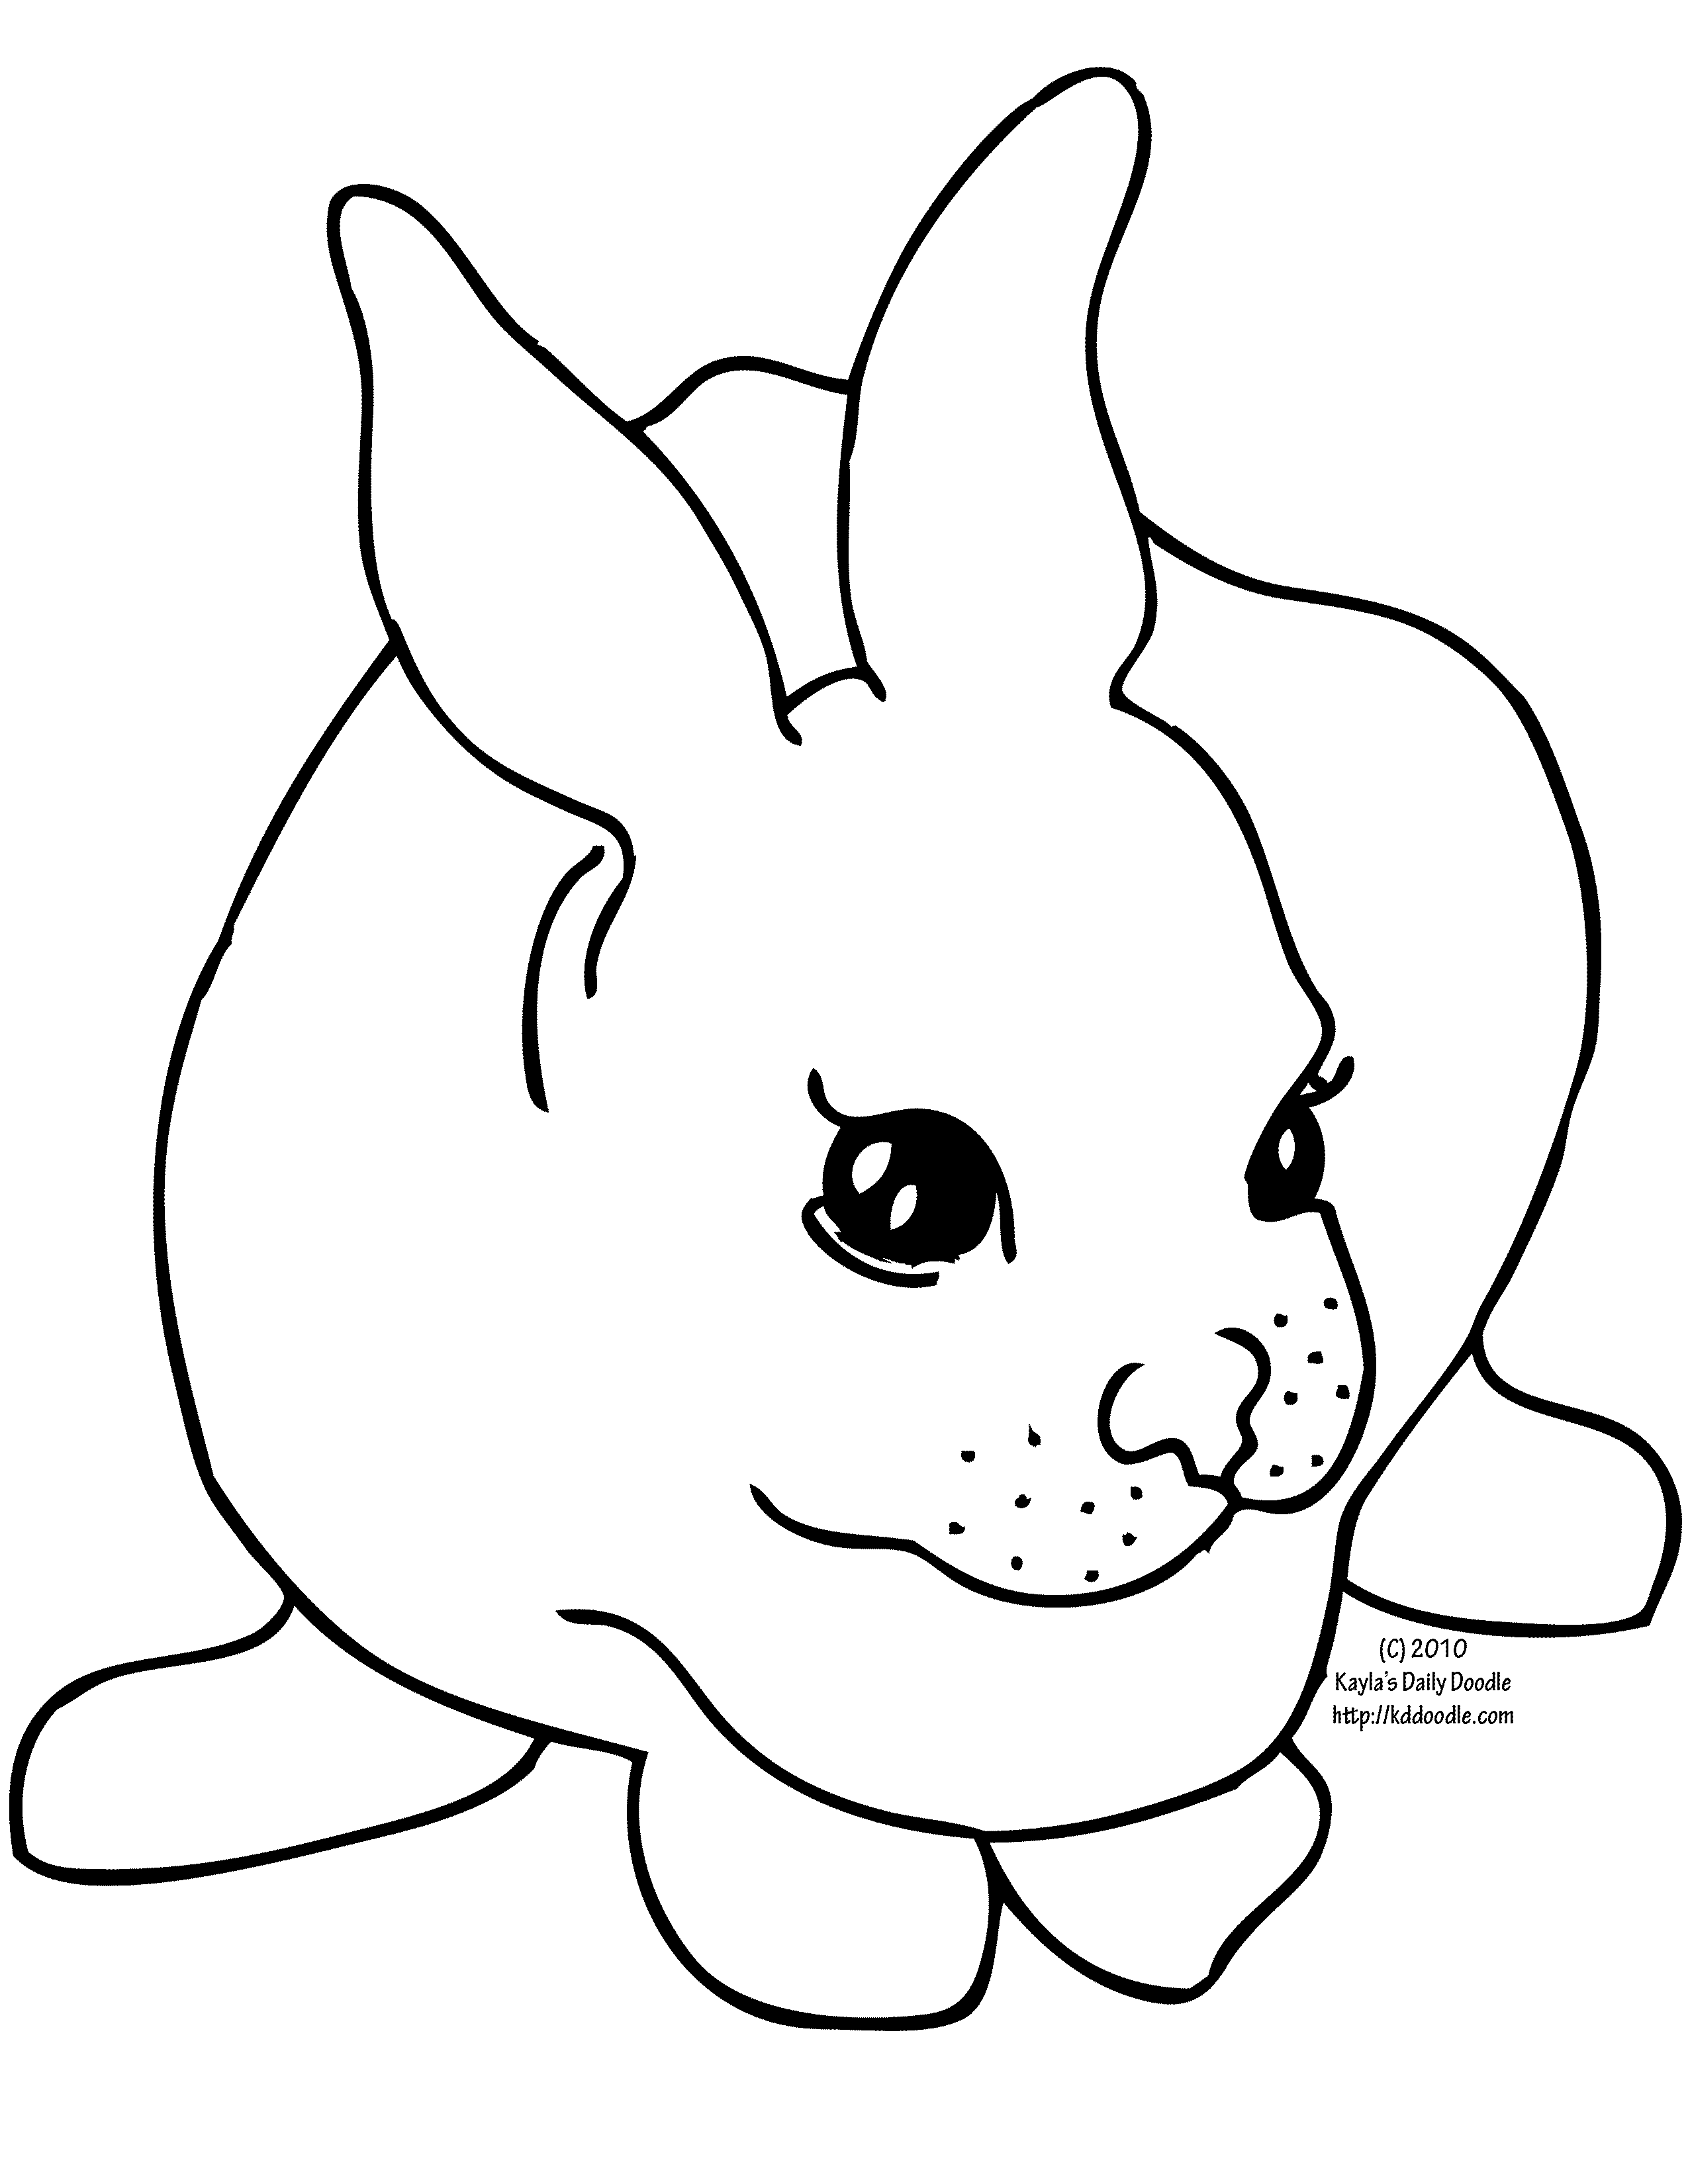 Rabbit Line Art | Free Download Clip Art | Free Clip Art | on ...